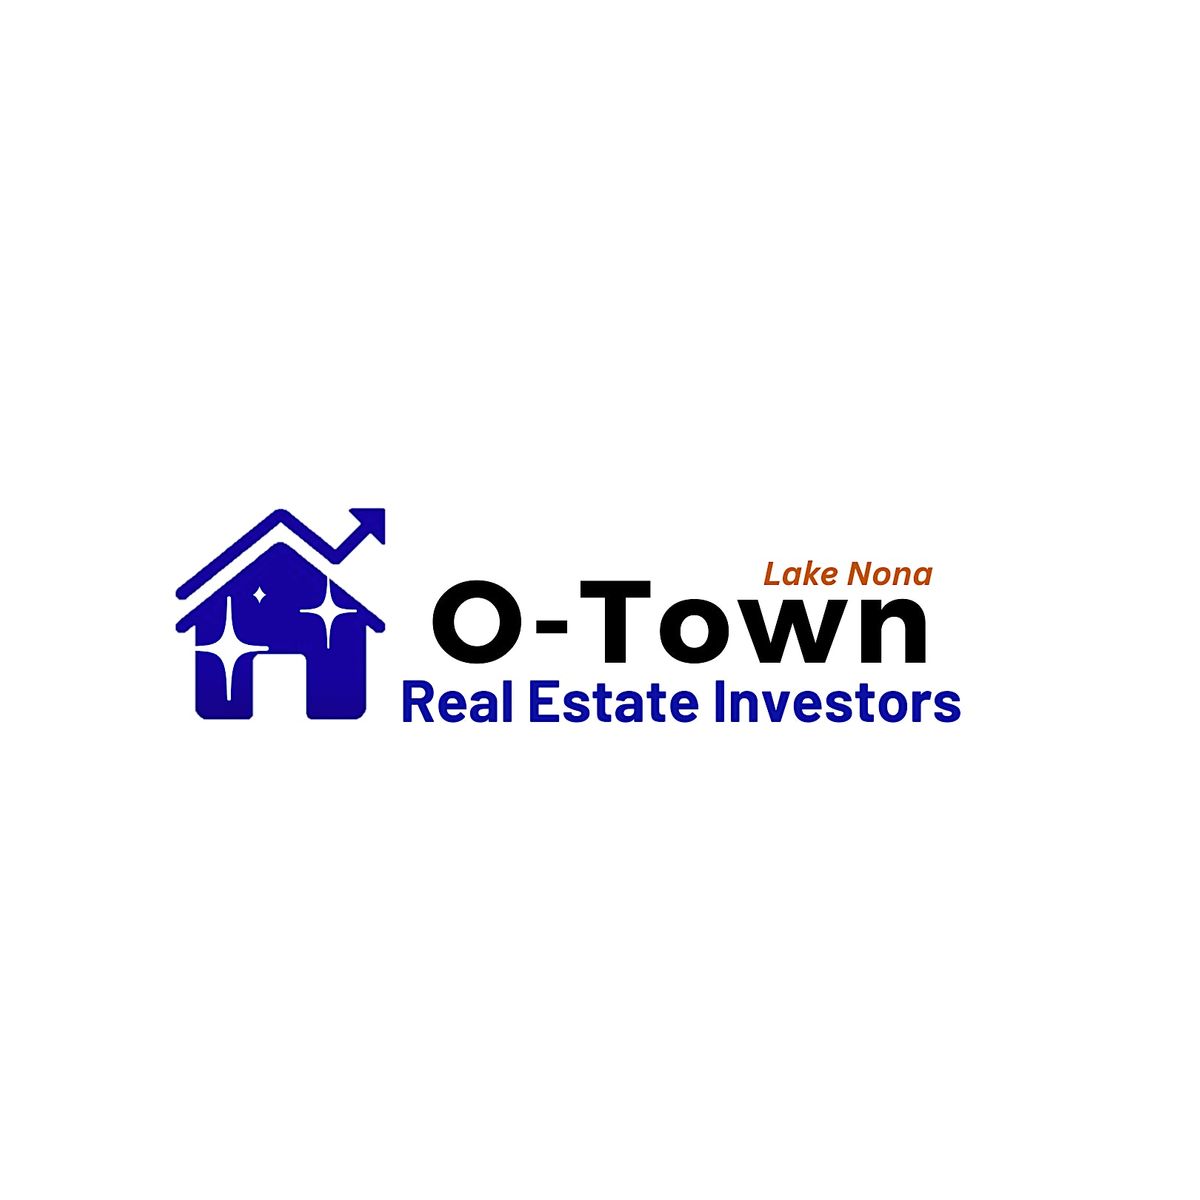 O-Town Real Estate Investors - Meetup